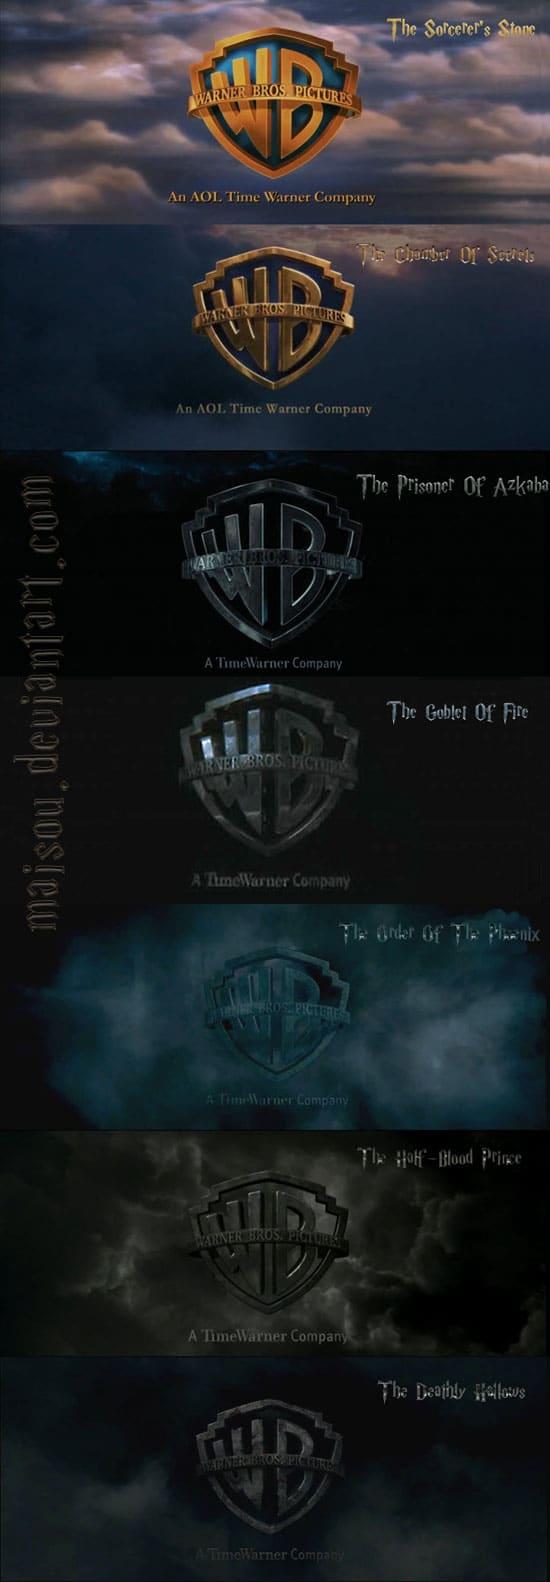 Harry Potter Opening Logo - Evolution Of Warner Bros. Logo In Harry Potter